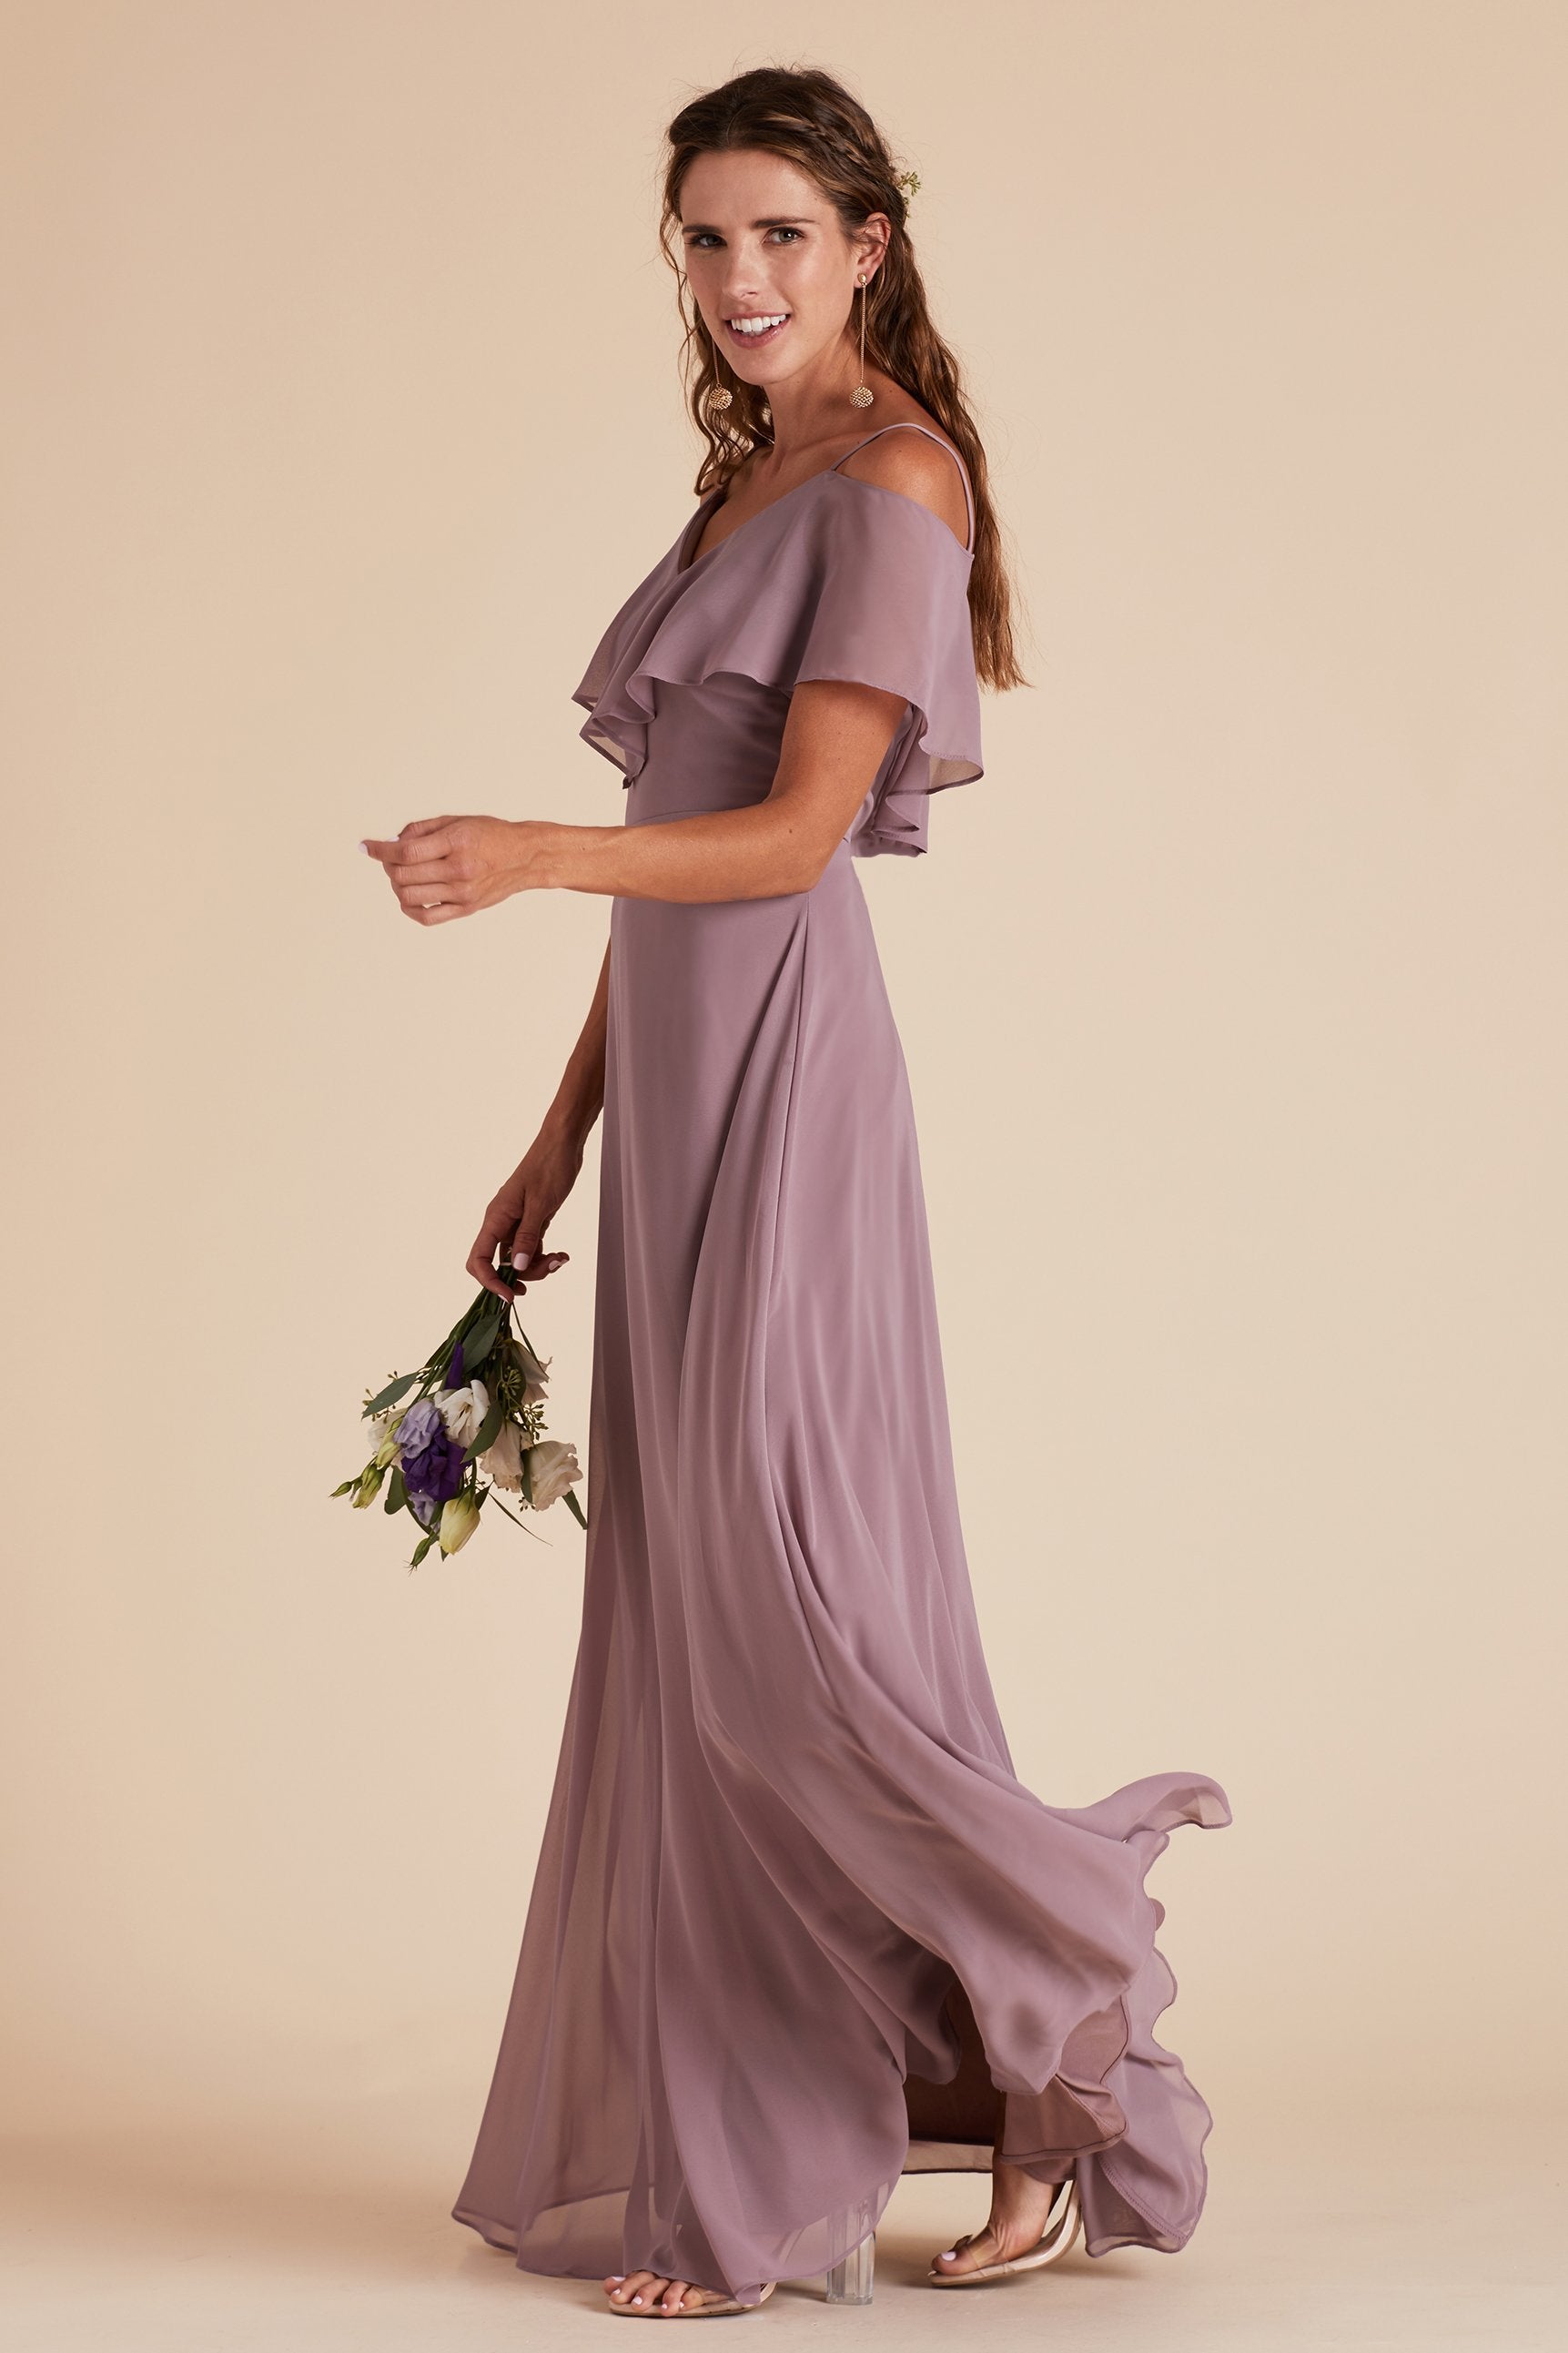 Jane convertible bridesmaid dress in dark mauve chiffon by Birdy Grey, side view